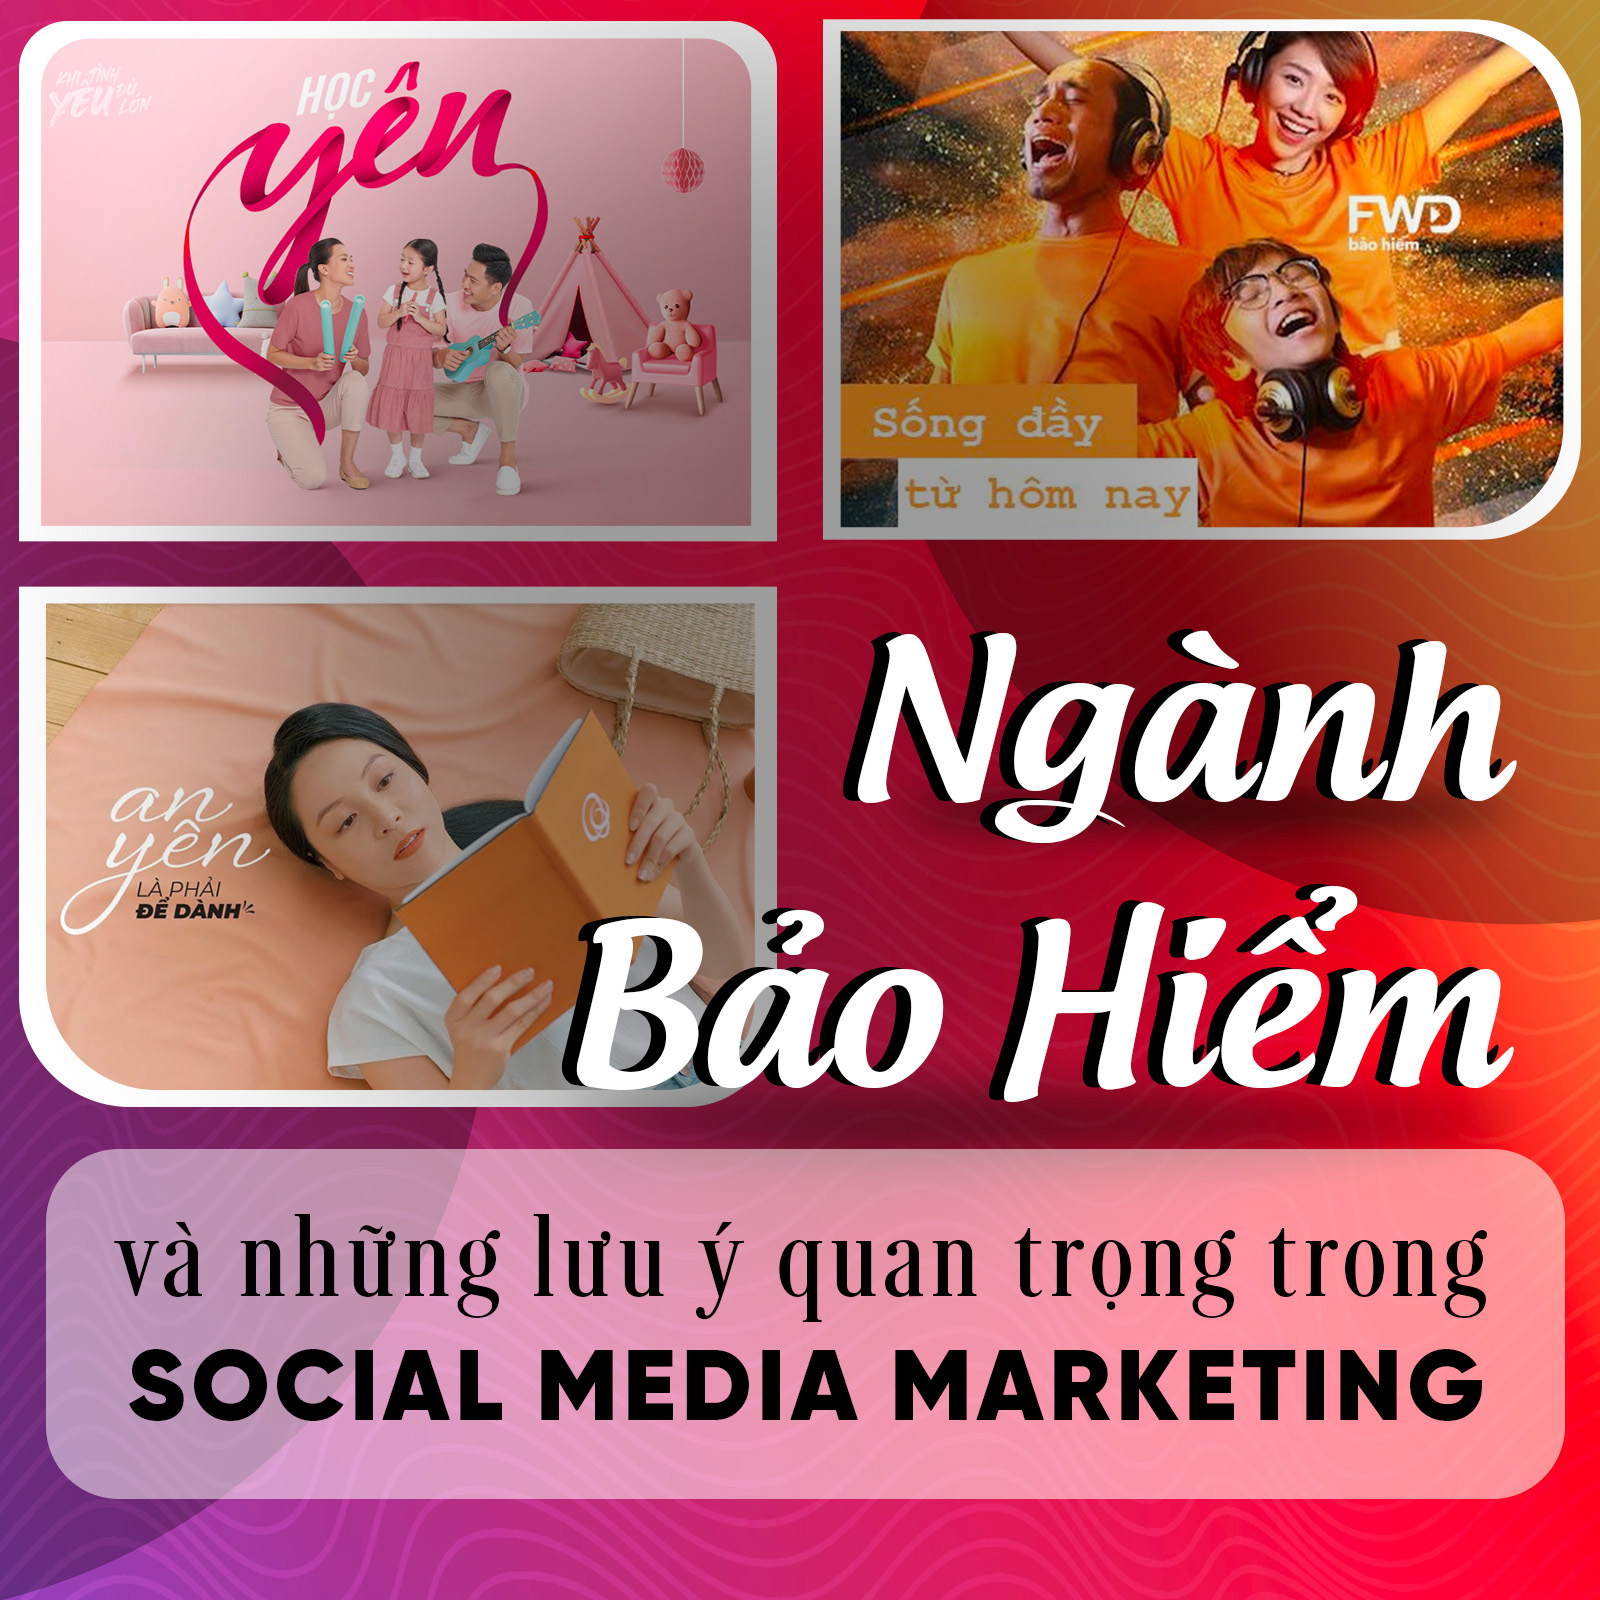 SOCIAL-MEDIA-MARKETING-NGANH-BAO-HIEM-2